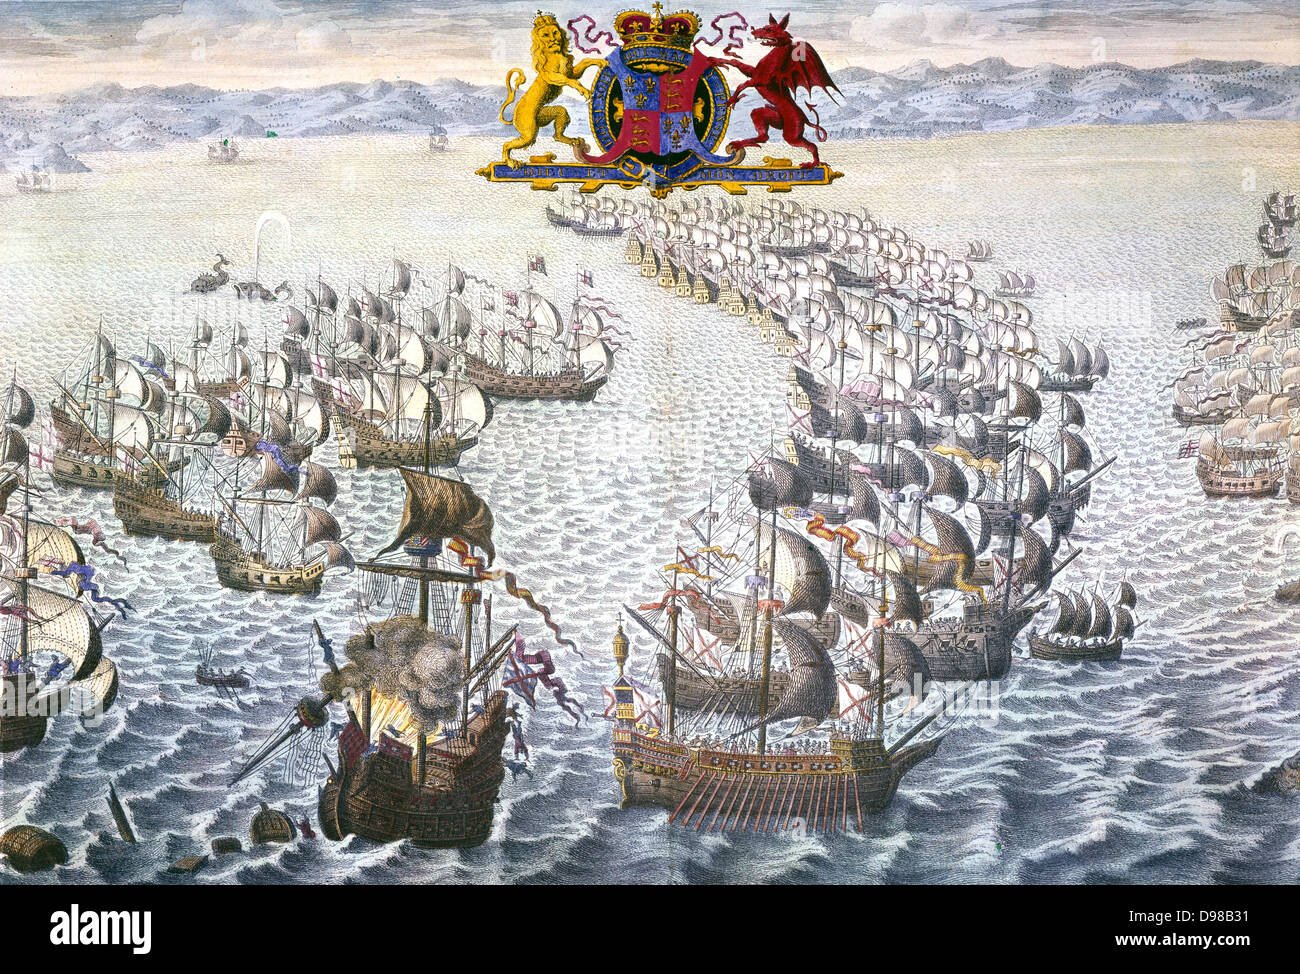 the-spanish-armada-the-spanish-fleet-under-the-duke-of-medina-sidonia-D98B31.jpg.fc3c341217f81dbbb5b42858ee710bb8.jpg